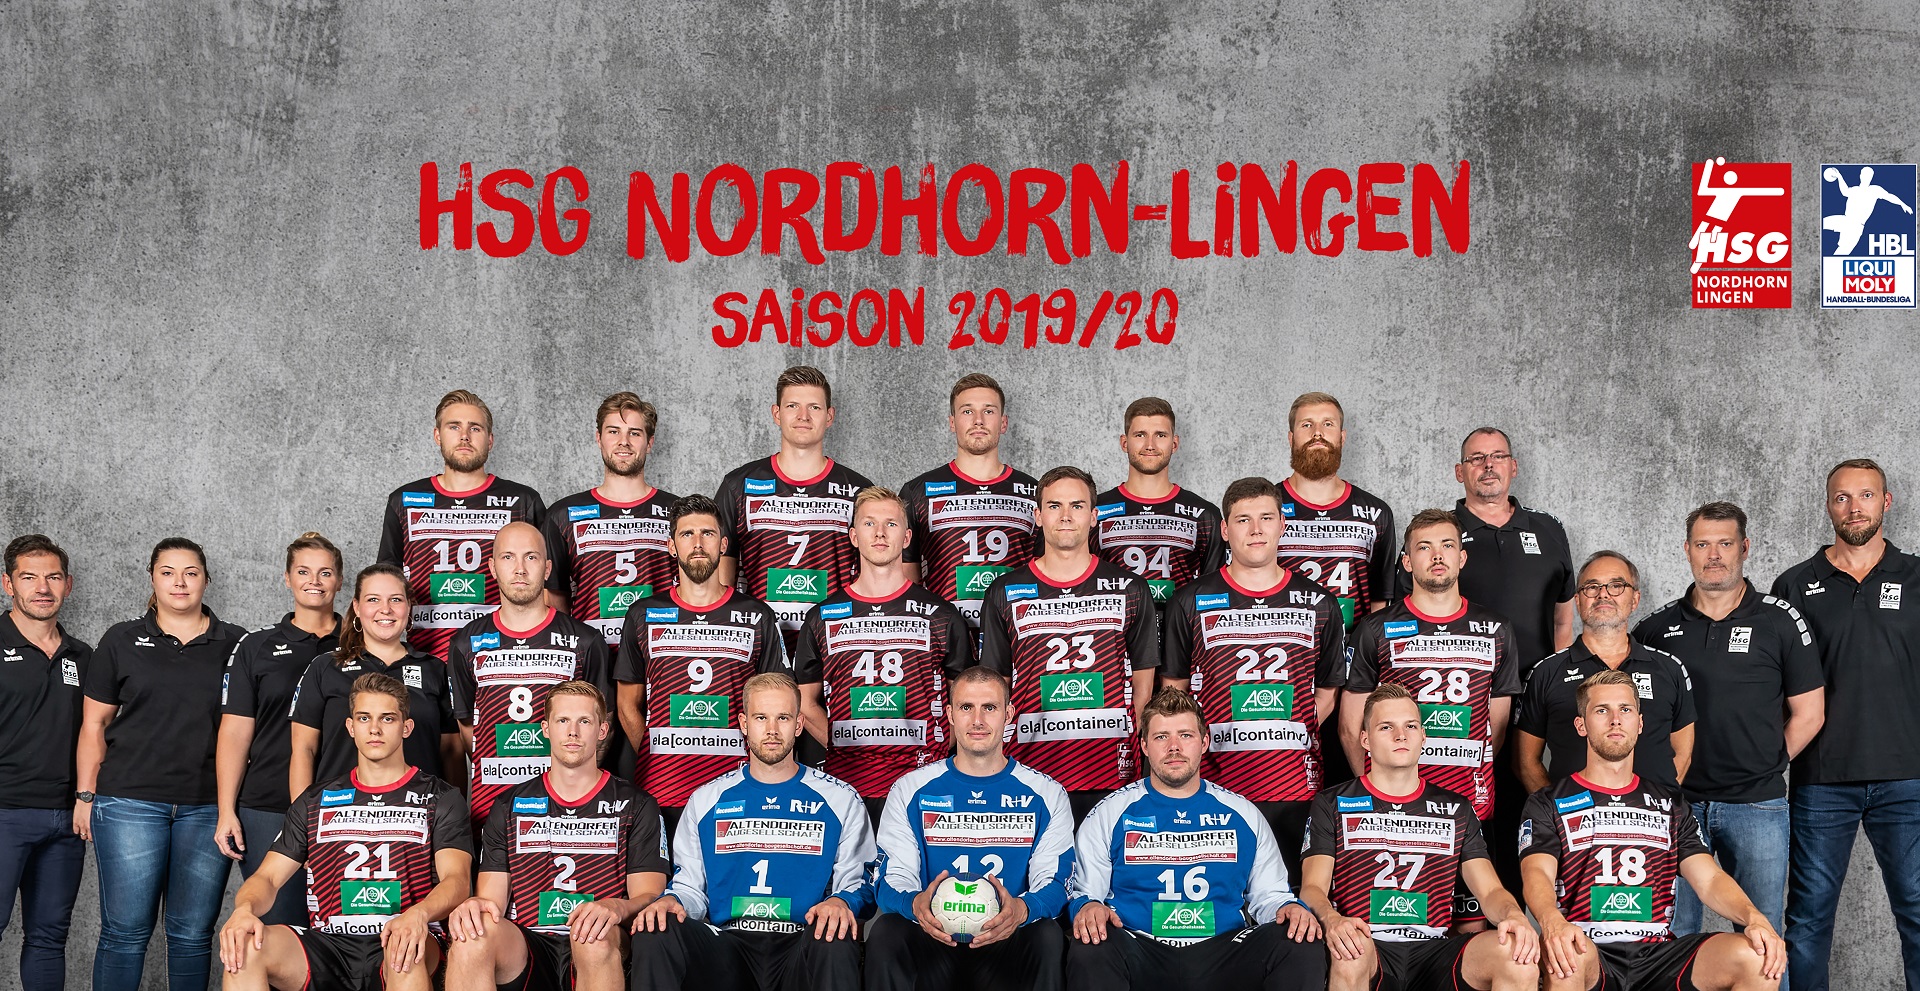 Heimspiel gegen Nordhorn-Lingen am Donnerstag